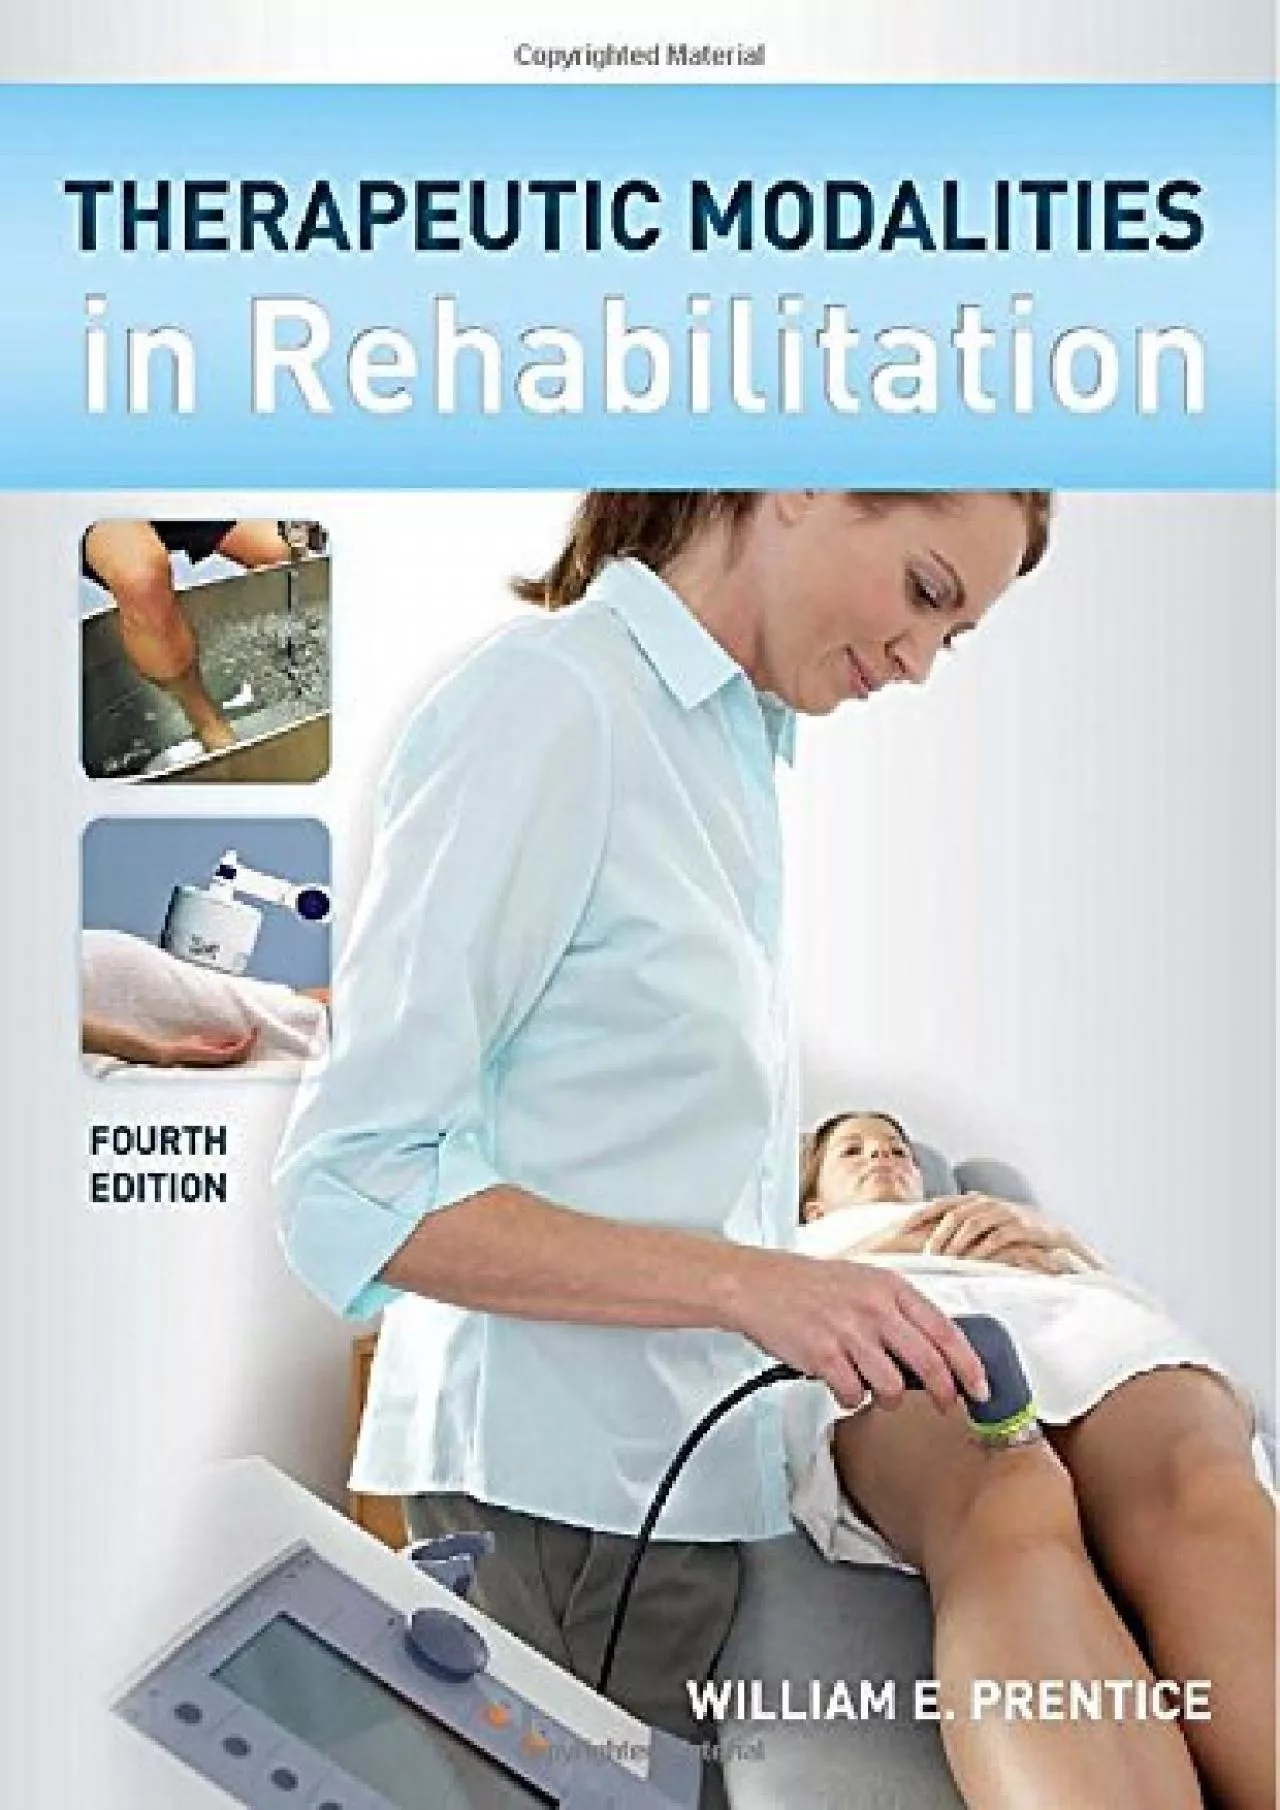 (BOOK)-Therapeutic Modalities in Rehabilitation, Fourth Edition (Therapeutic Modalities